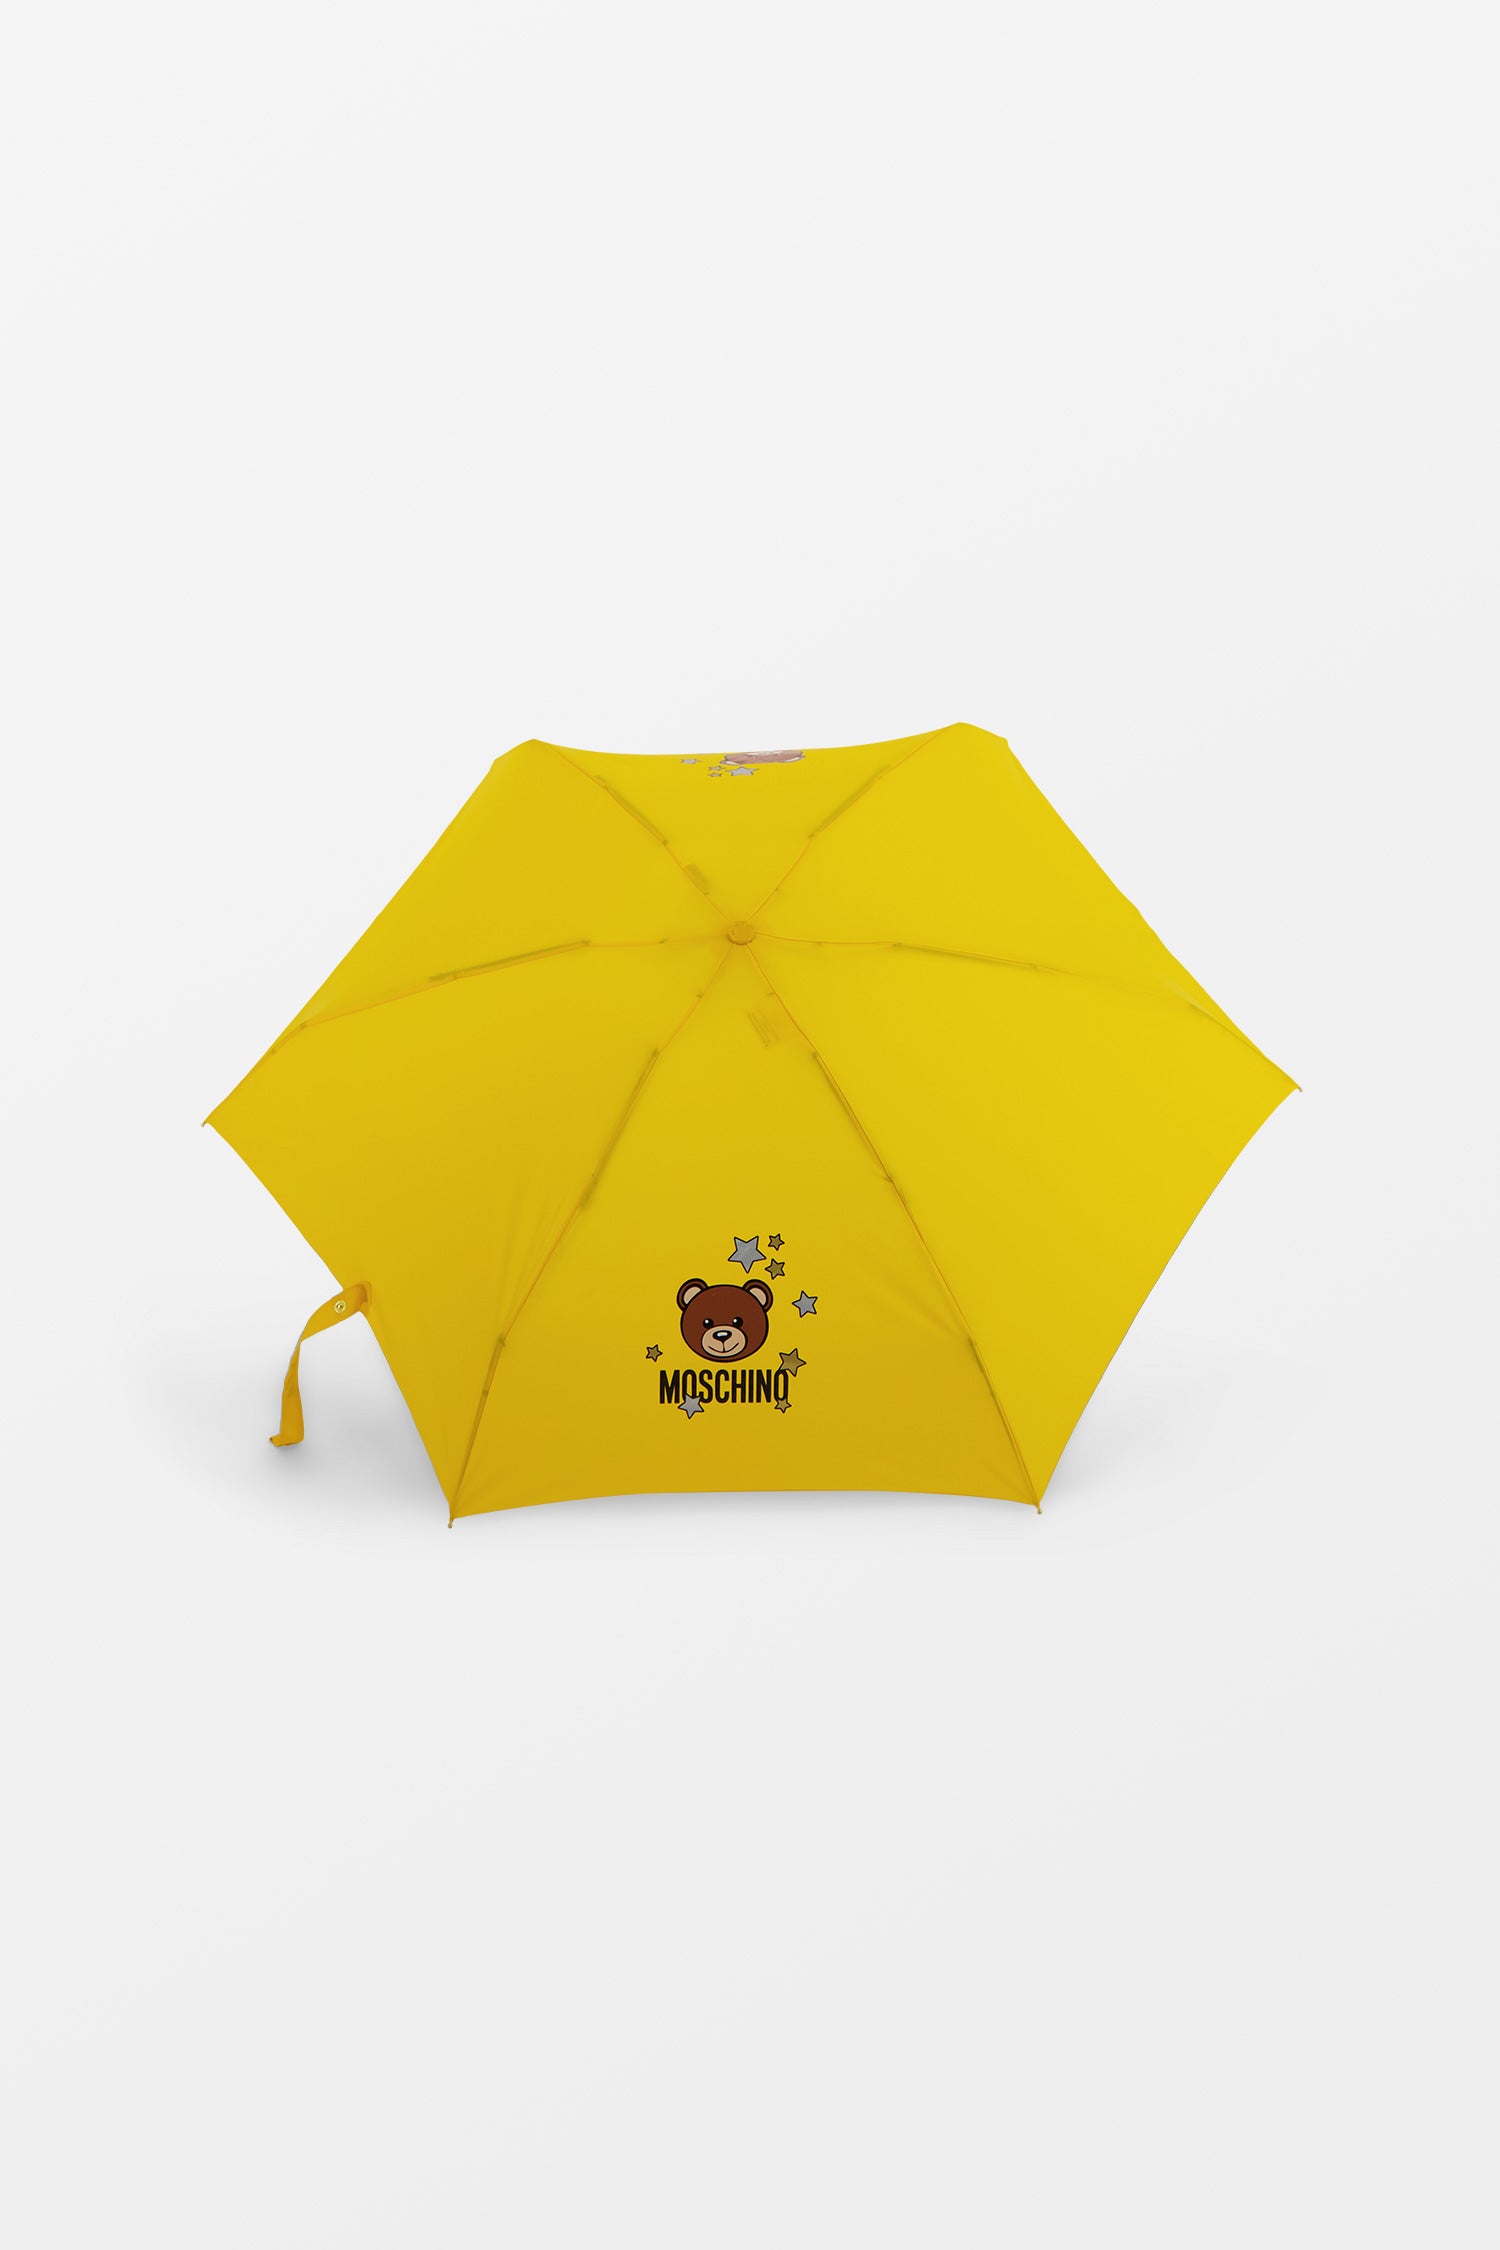 Moschino Toy Stars Compact Yellow Umbrella